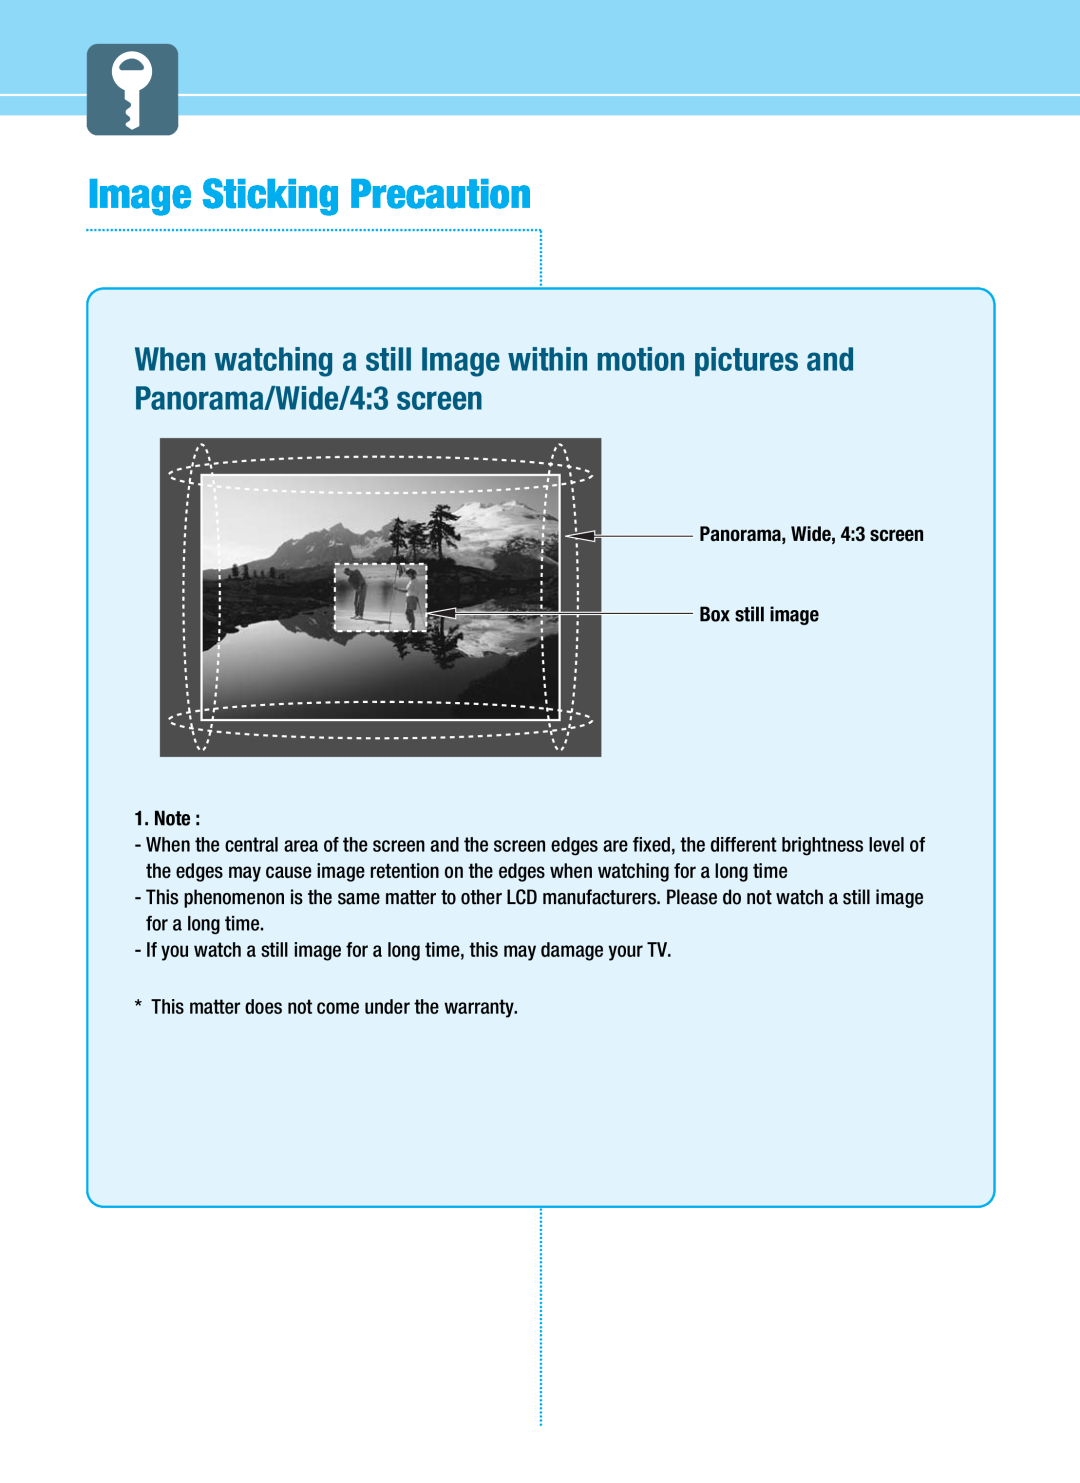 Hyundai Q421H, Q421S, Q501 manual Image Sticking Precaution, Panorama, Wide, 43 screen Box still image 1. Note 